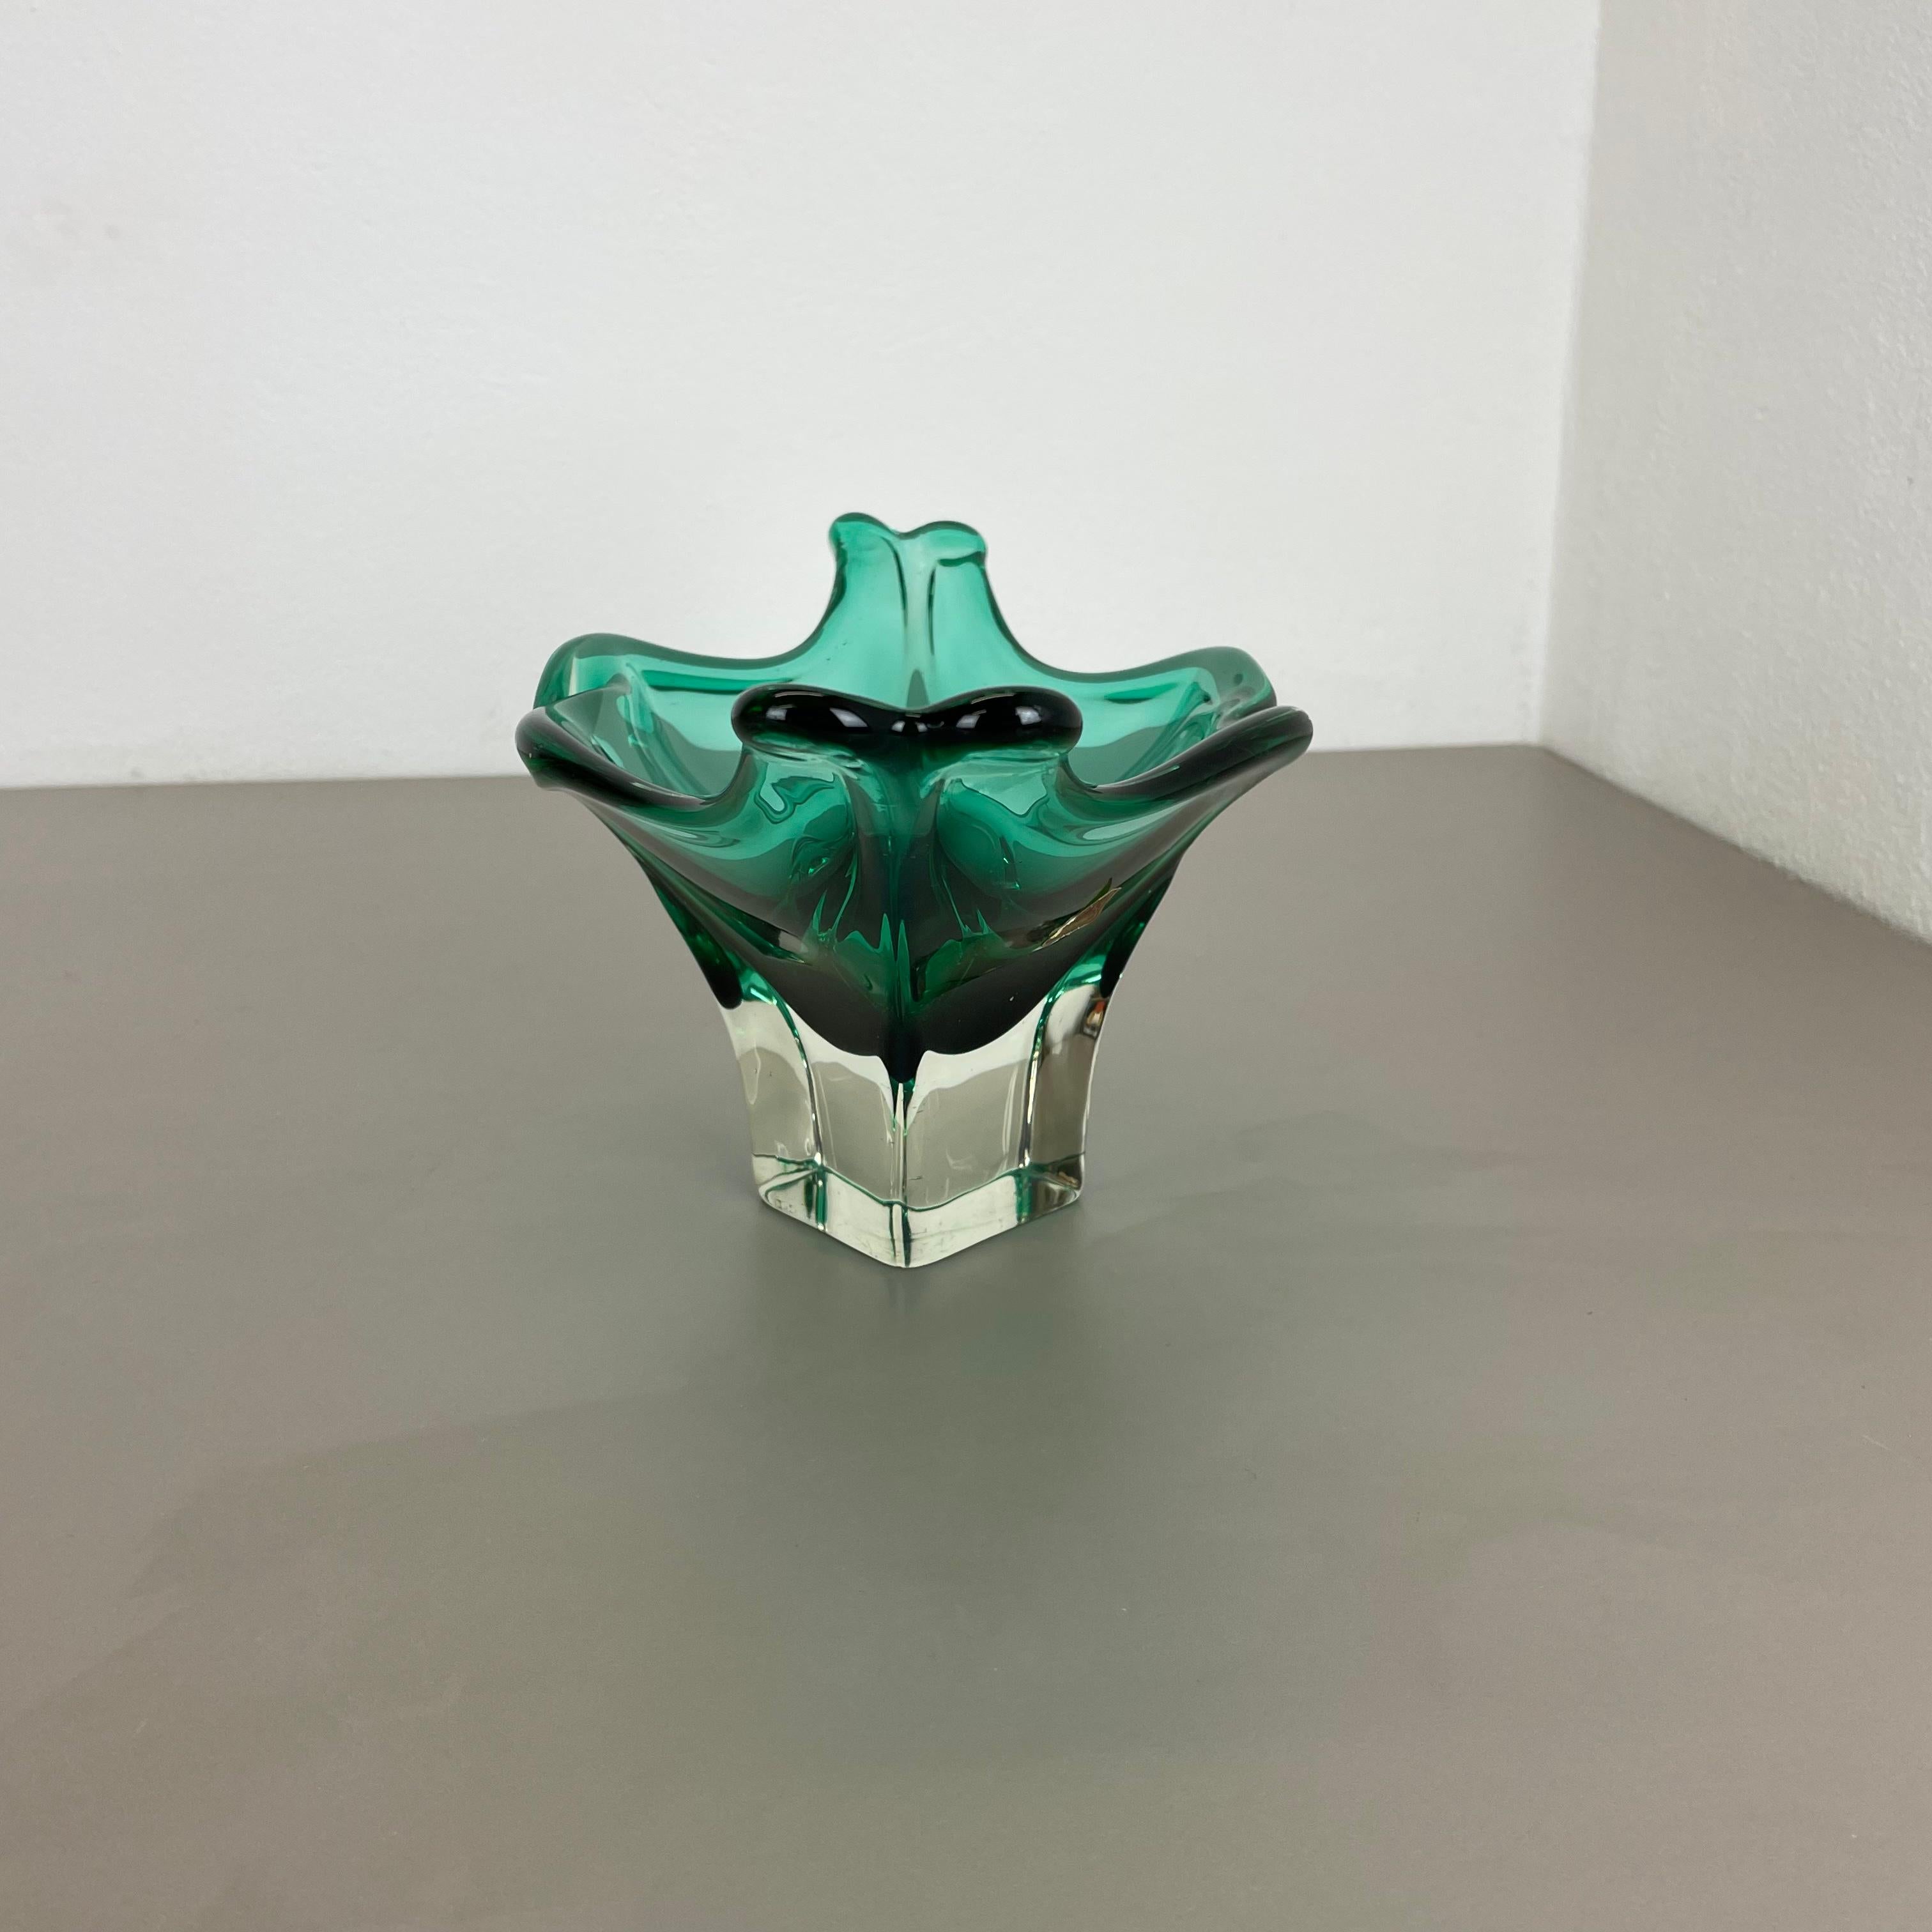 2, 3 Kg Glass Bowl Shell Centerpiece by Flavio Poli Attrib., Murano, Italy, 1970s For Sale 5